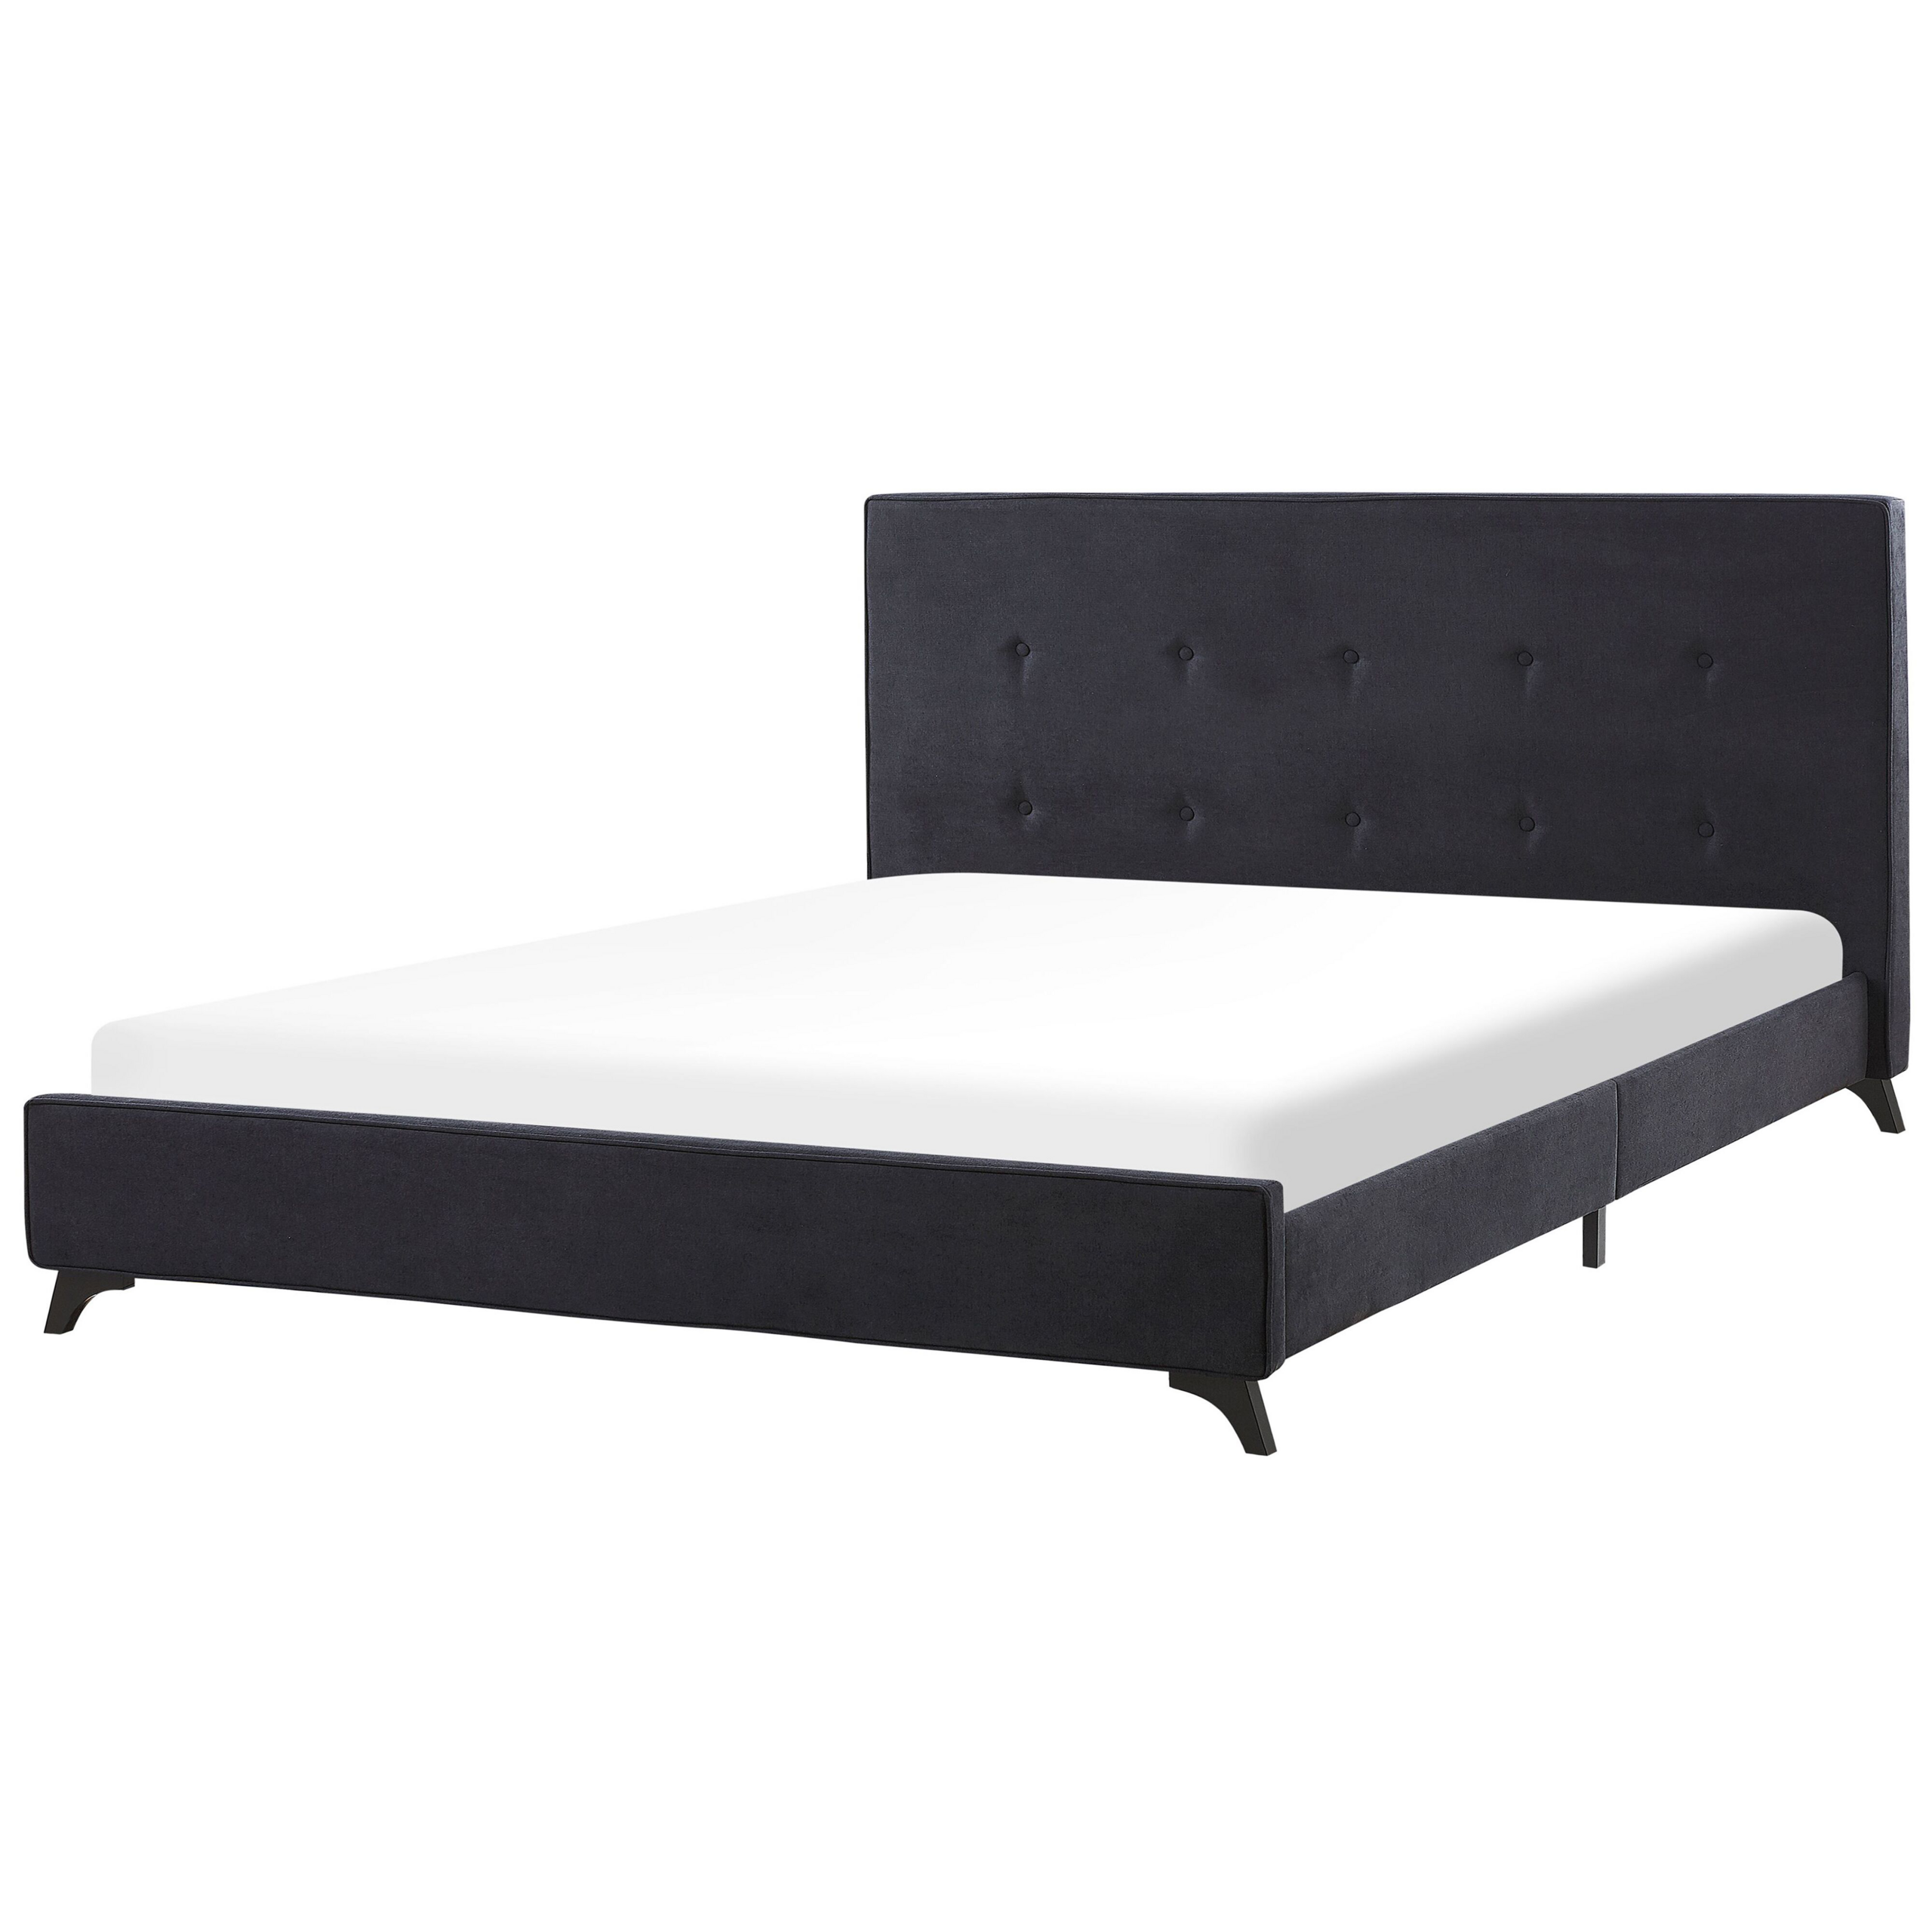 Beliani Double Bed Frame Black 180 x 200 cm Super King Size Upholstered